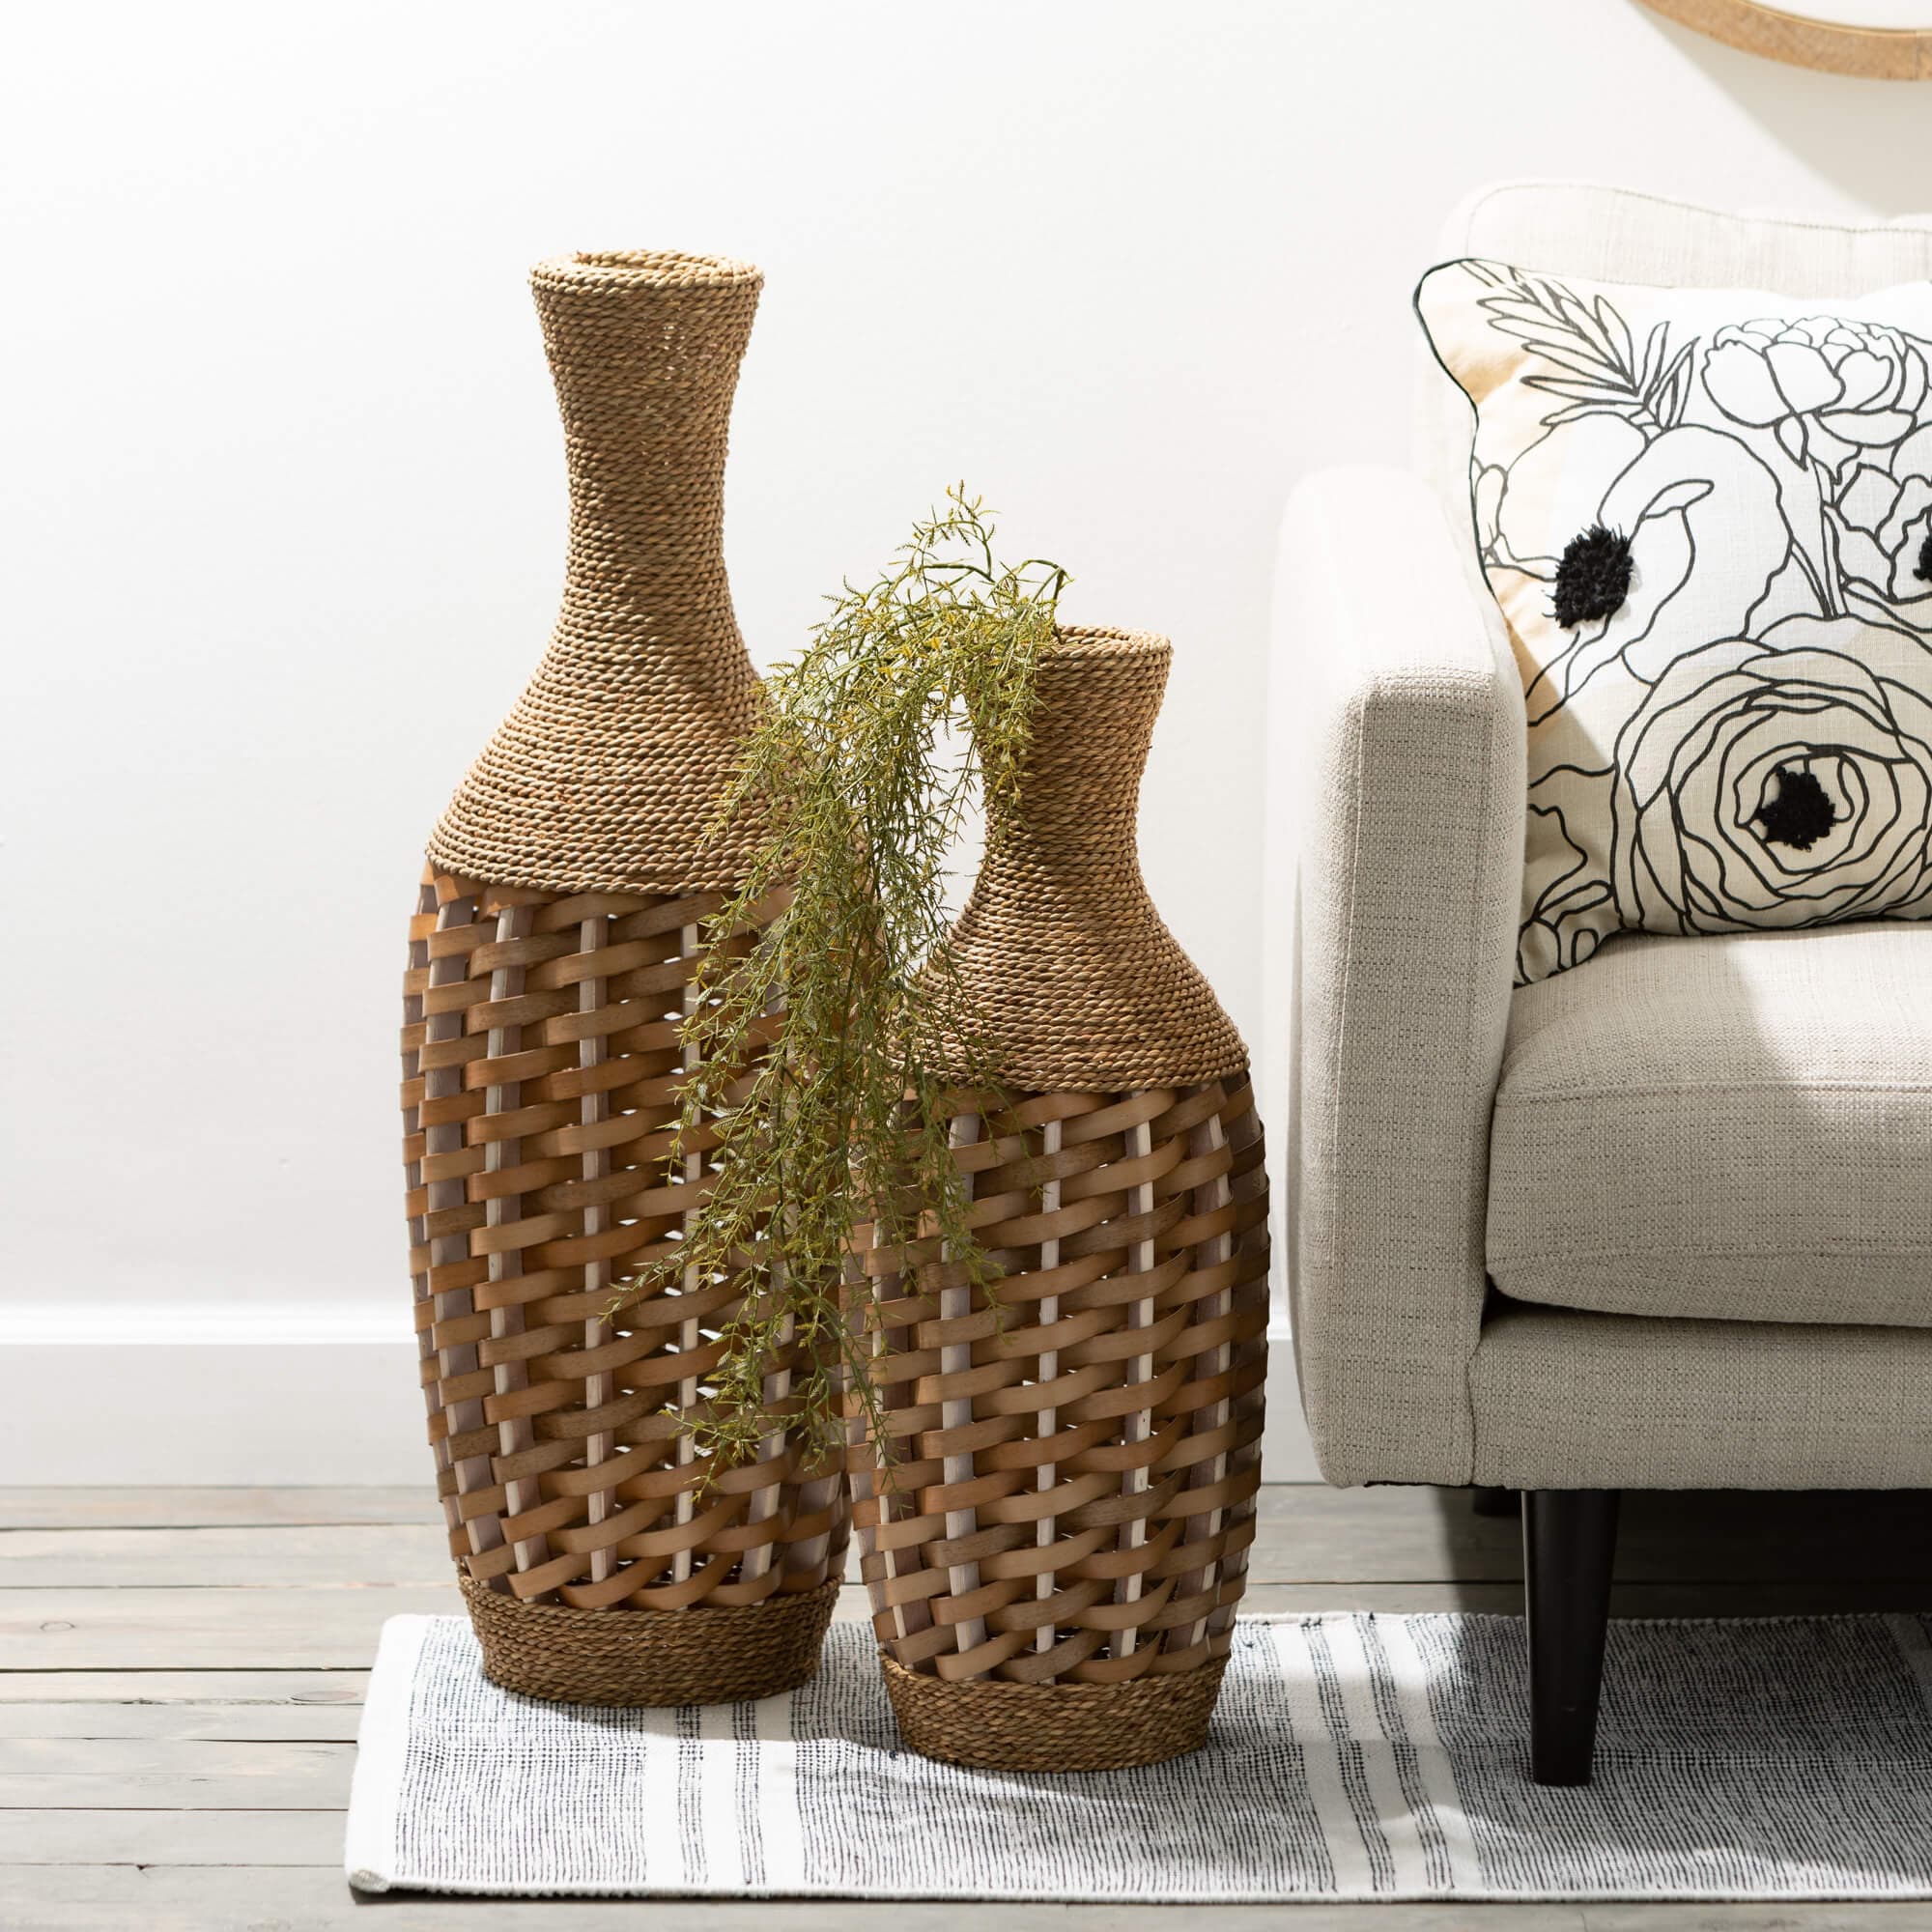 Organic Woven Rattan Vases Elevate Home Decor - Vases